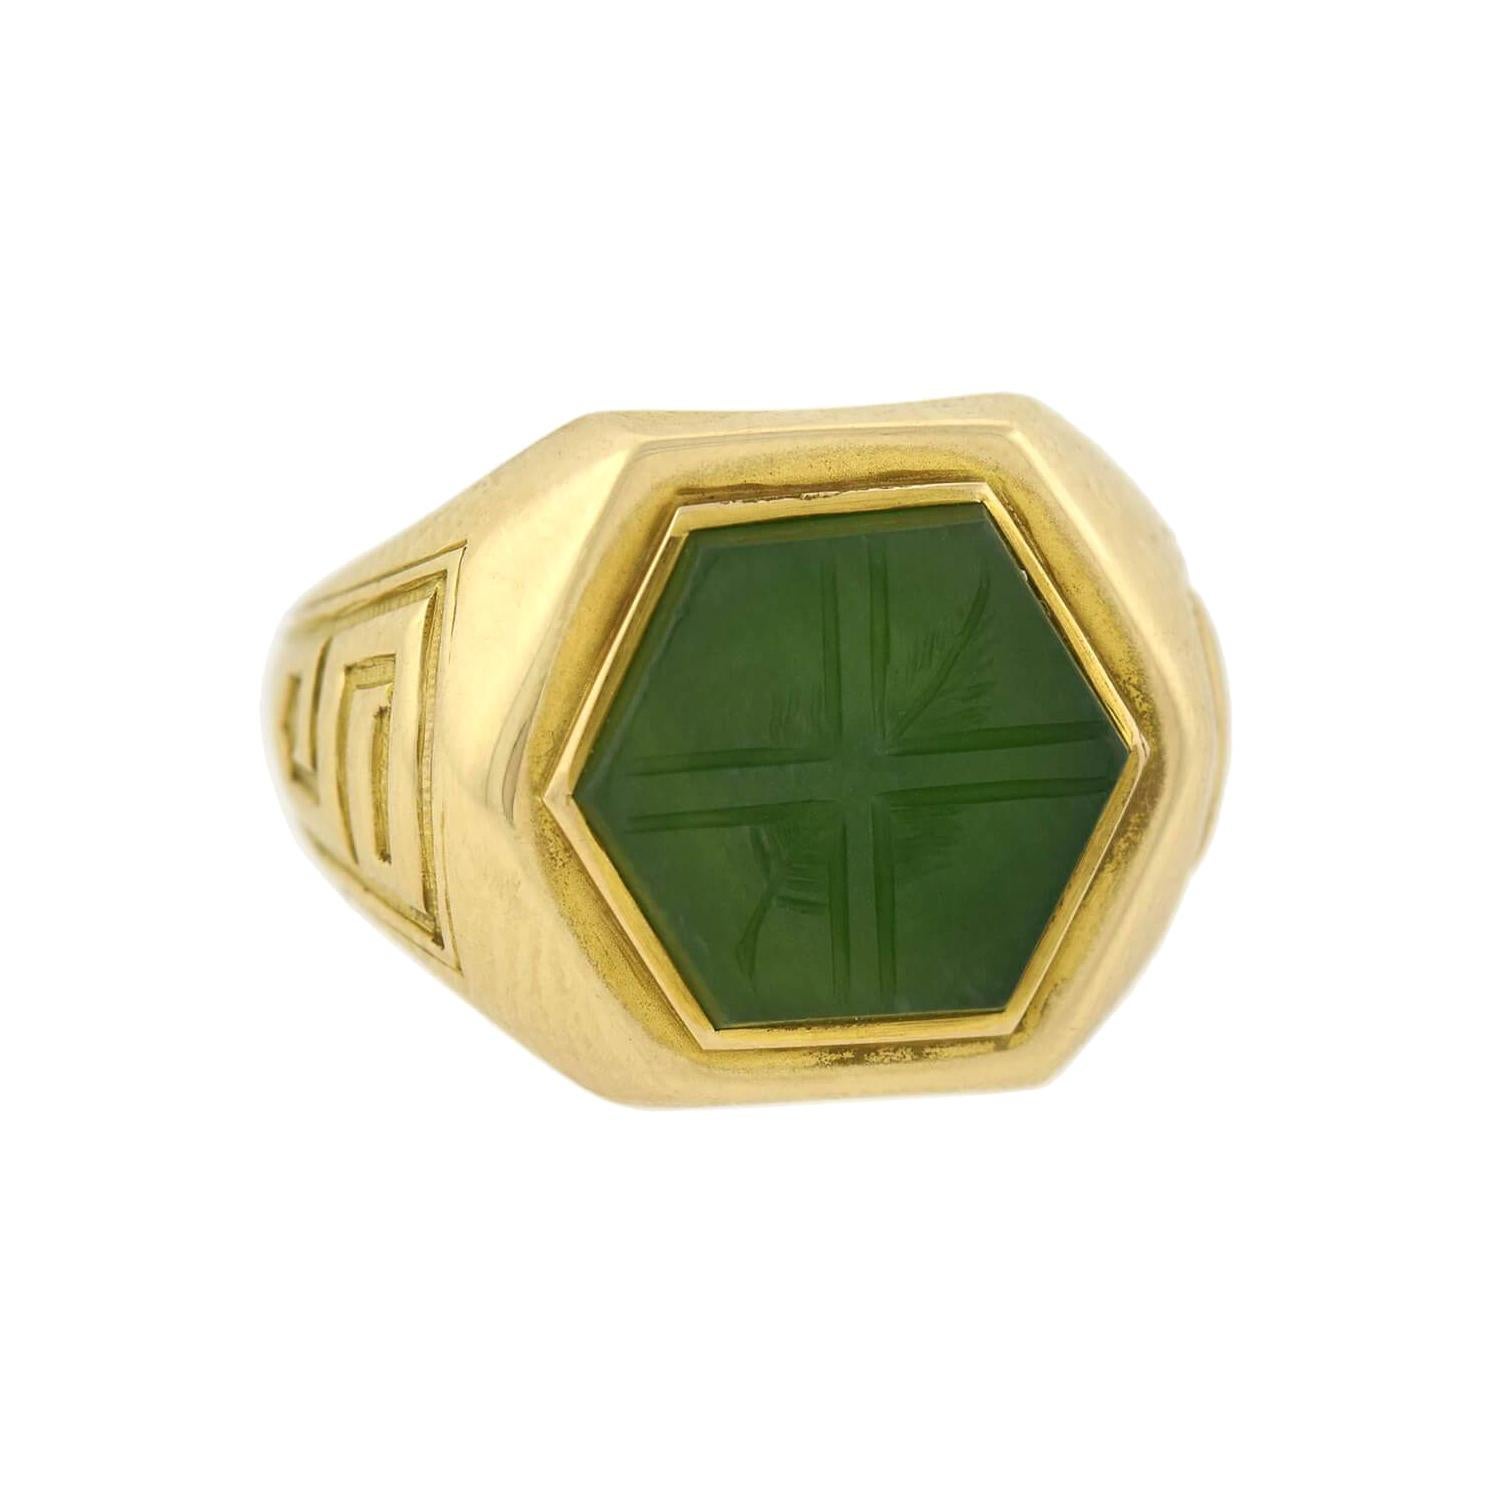 Tiffany & Co. Art Deco Nephrite Jade Carved "Palm Leaf" Signet Ring